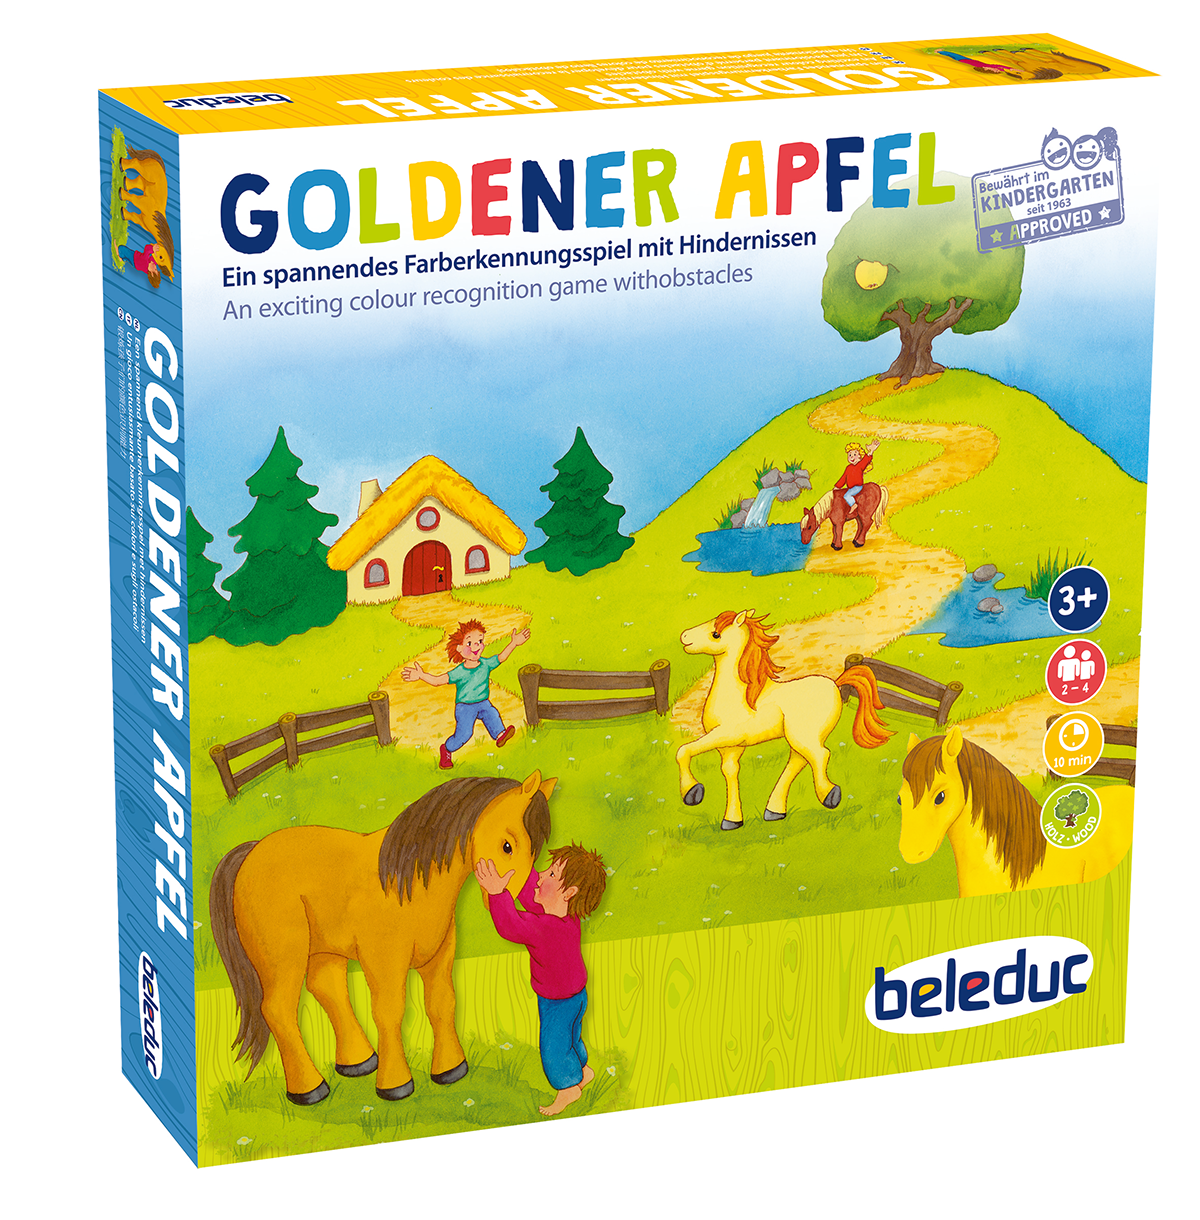 Beleduc Golden Apple Board Game